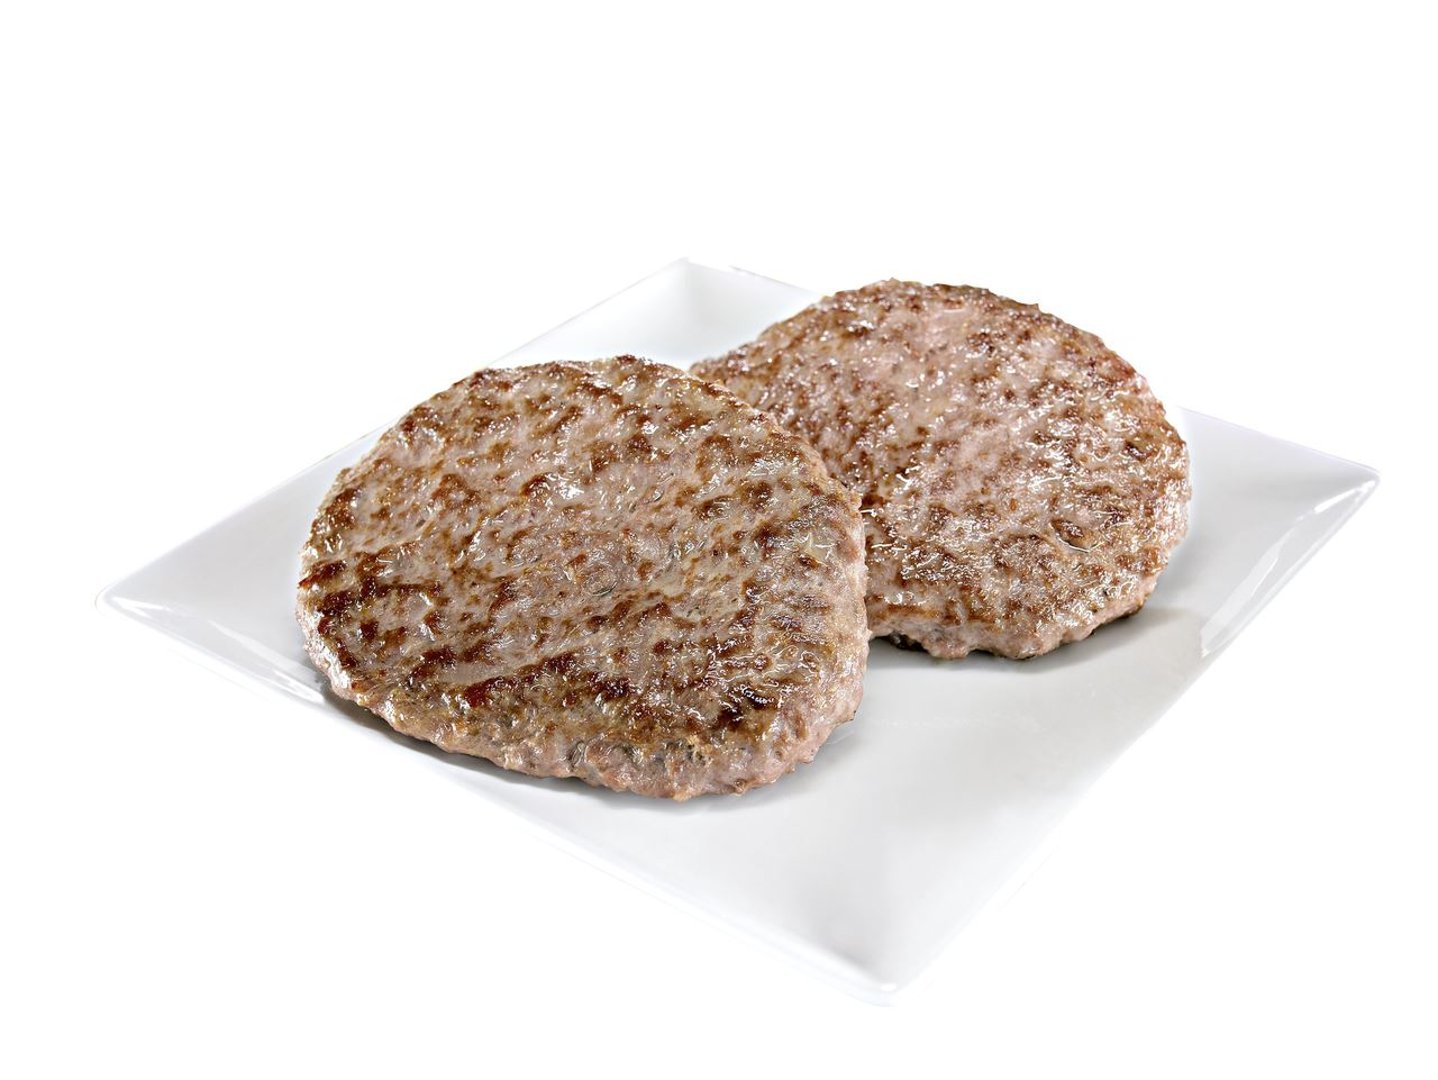 METRO Premium - American Beef Burger tiefgefroren, 6 Stücke à 200 g, vak.-verpackt - 1,2 kg Packung